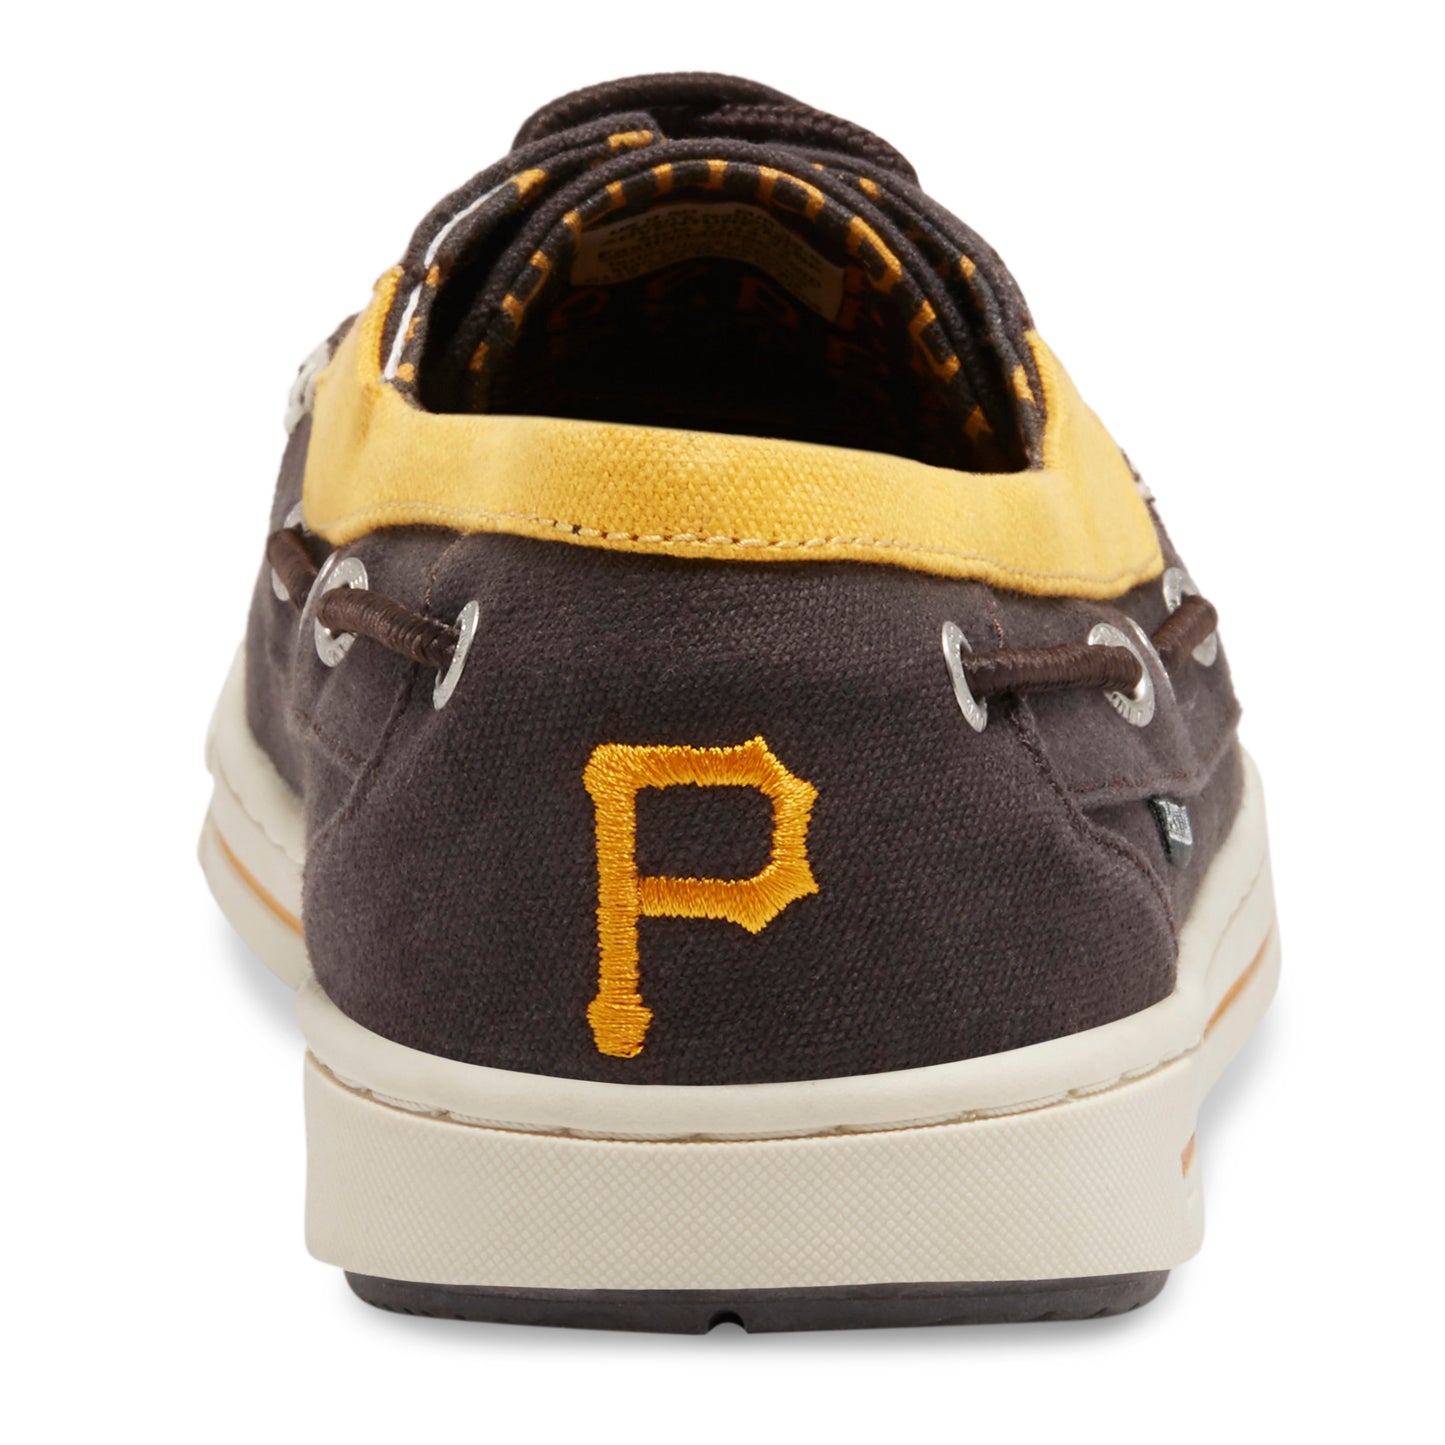 Men's Adventure MLB Pittsburgh Pirates Canvas Boat Shoe